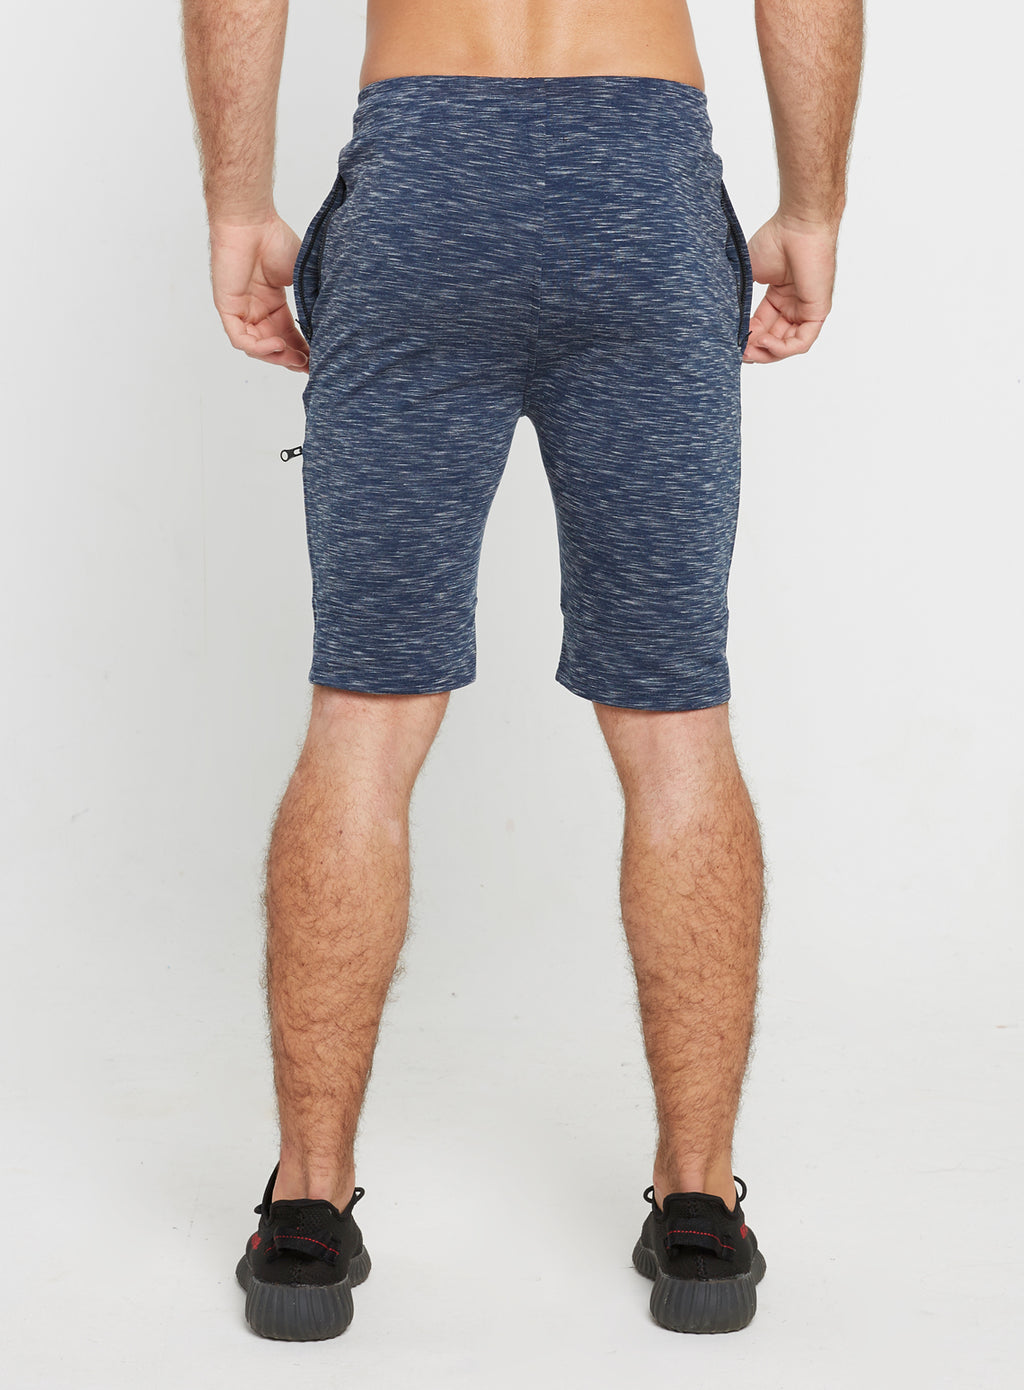 Gym Monkee - Navy Striped Shorts REAR